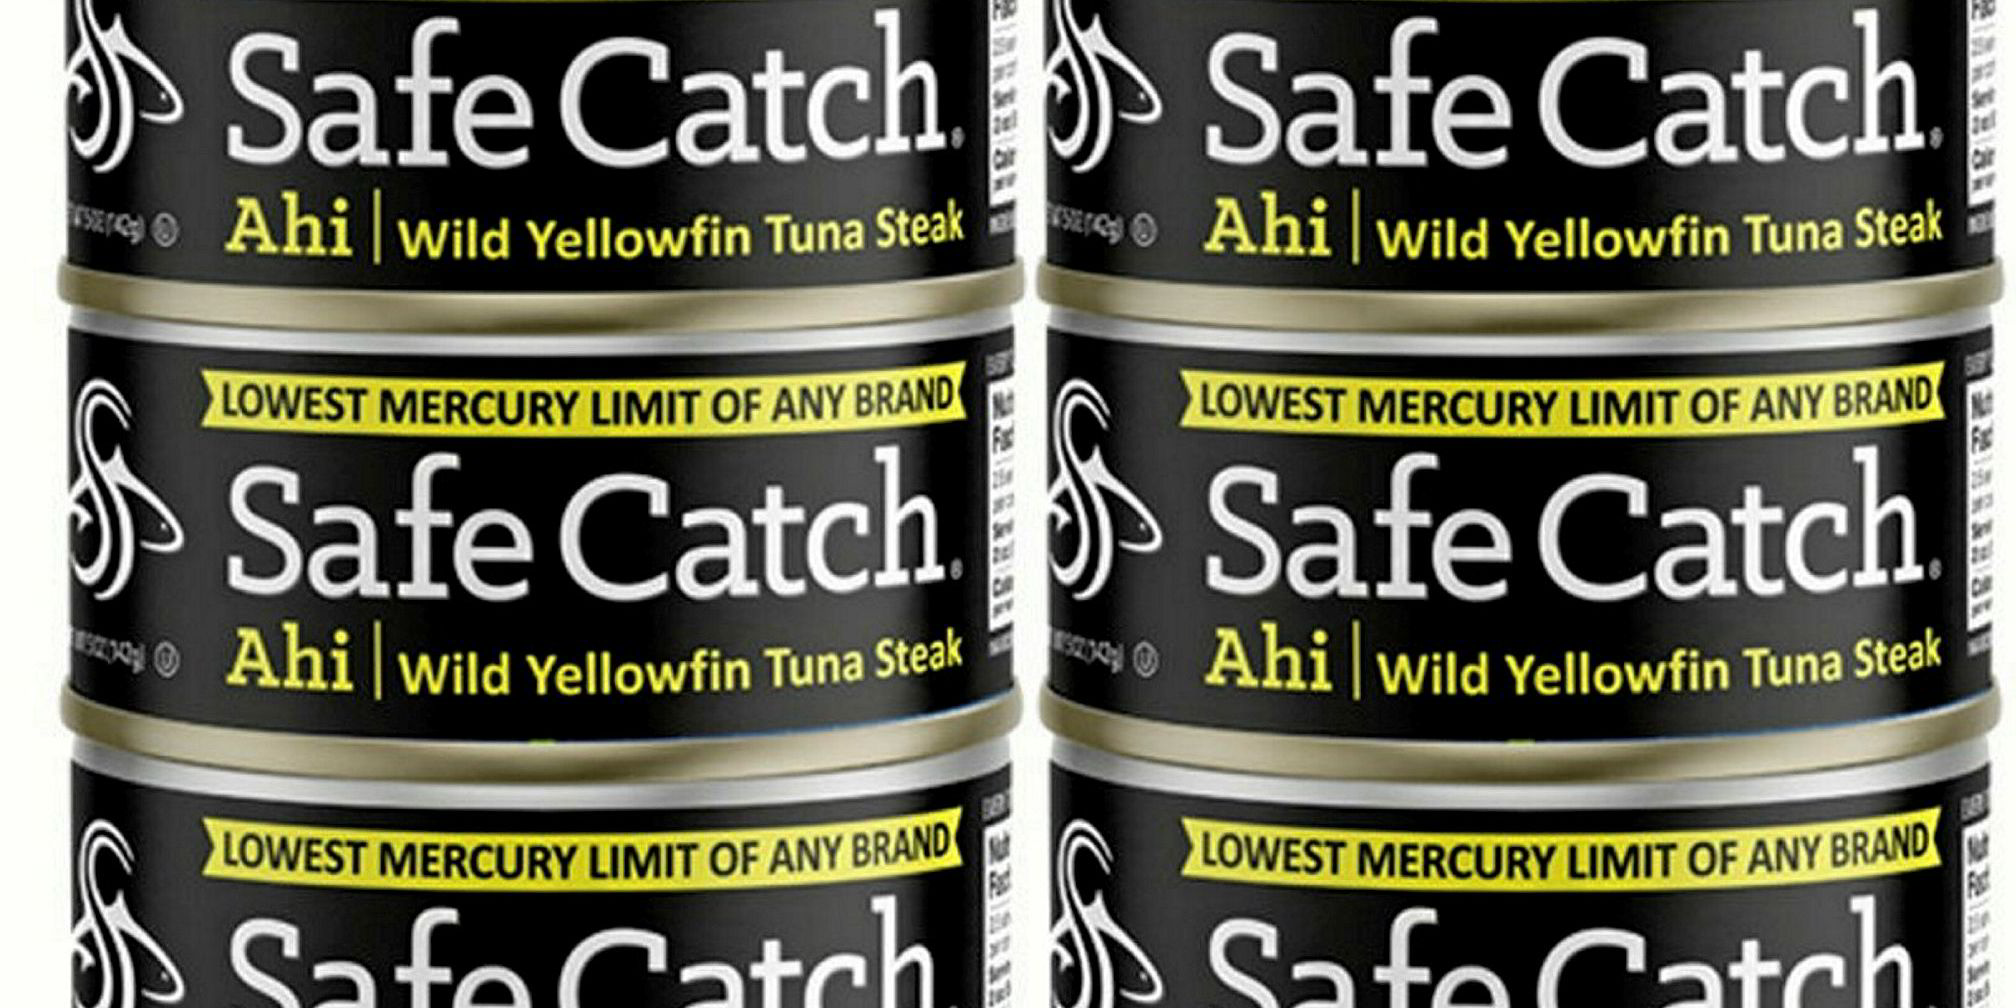 Low-mercury US tuna brand expands into Costco